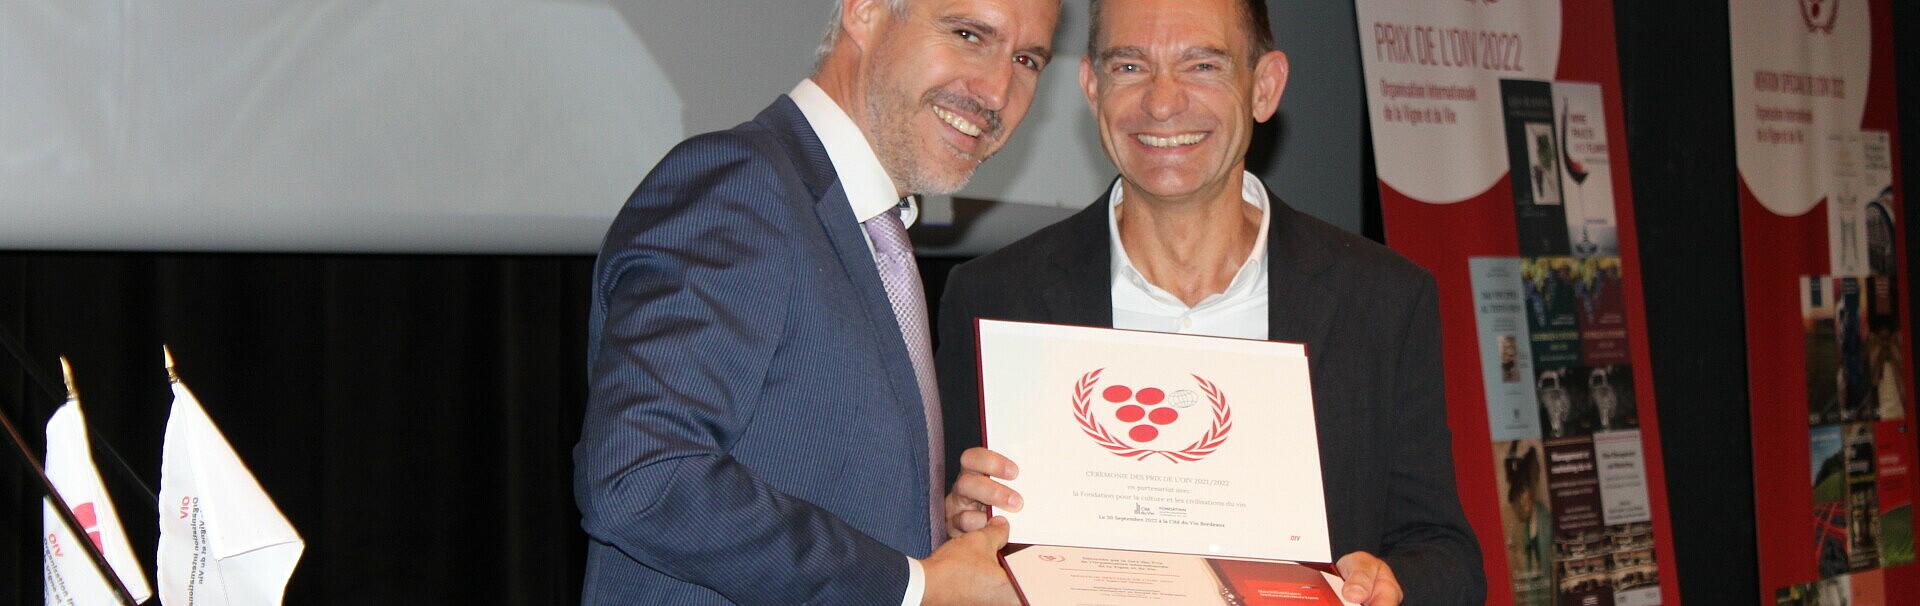 Award ceremony: Marc Dreßler with Richard Pfister, Scientific Secretary of the OIV (Image: OIV)